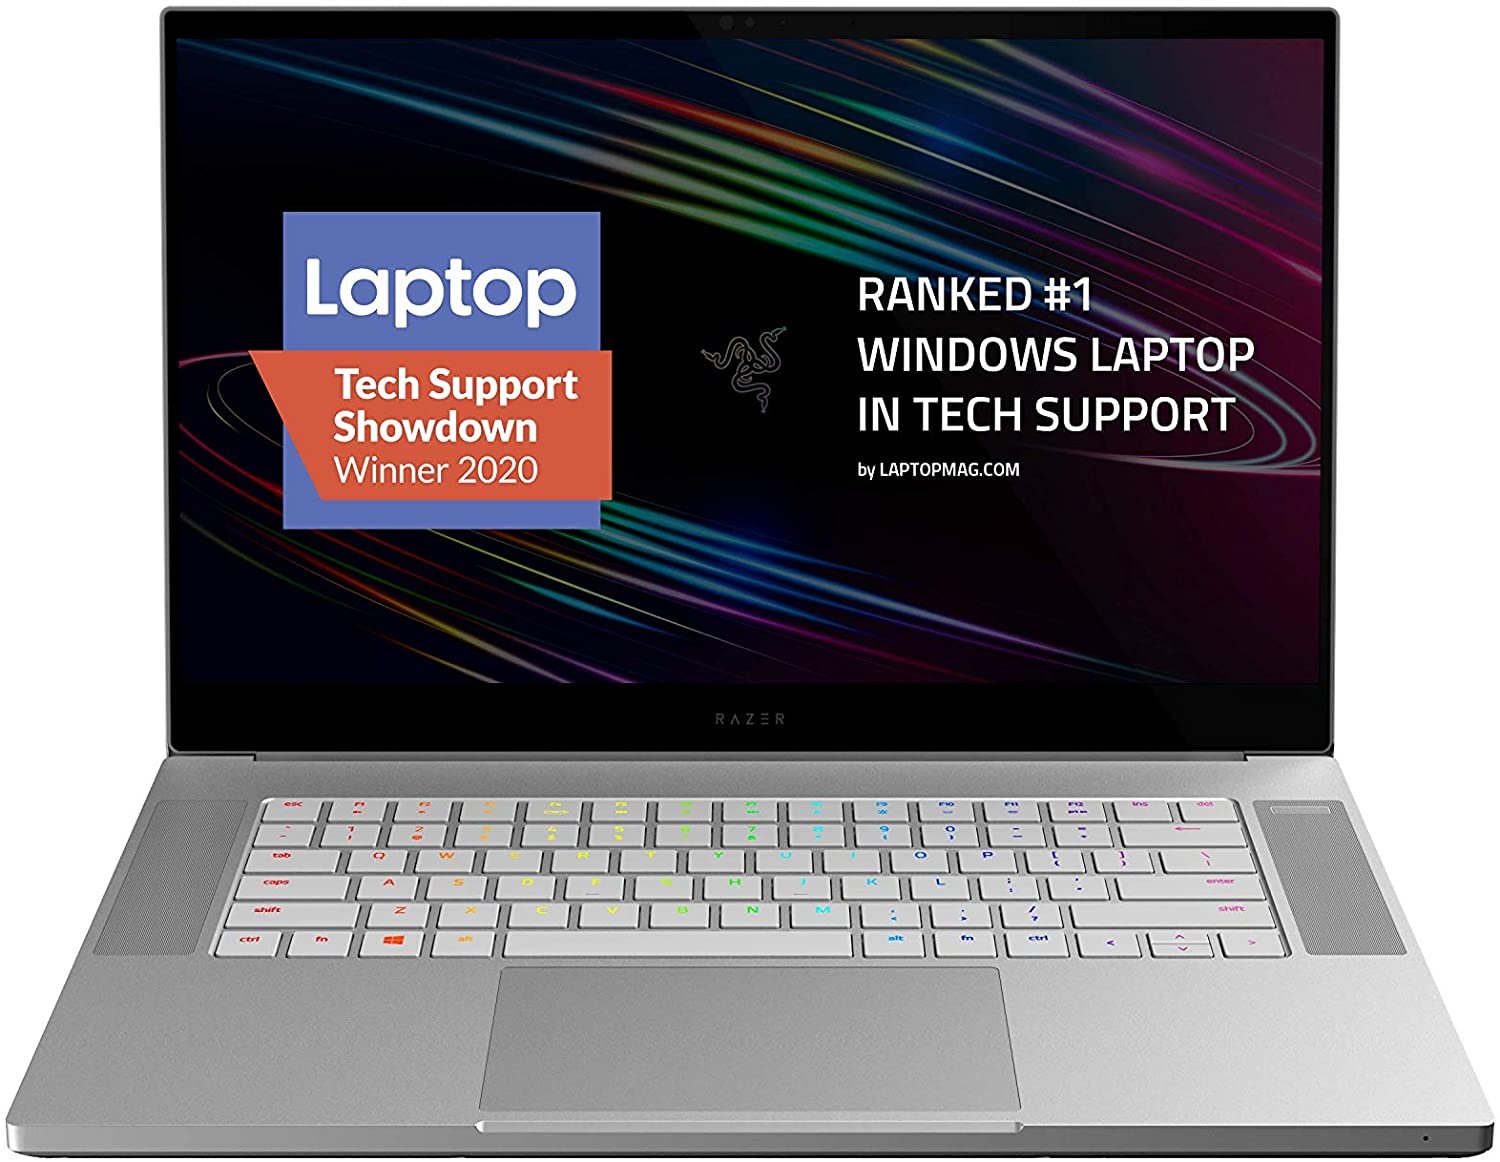 Razer Blade 15 Studio Edition Laptop 2020: Intel Core i7-10875H 8-Core, NVIDIA Quadro RTX 5000, 15.6” 4K OLED Touch, 32GB RAM, 1TB SSD, CNC Aluminum, Chroma RGB, Thunderbolt 3, Creator Ready